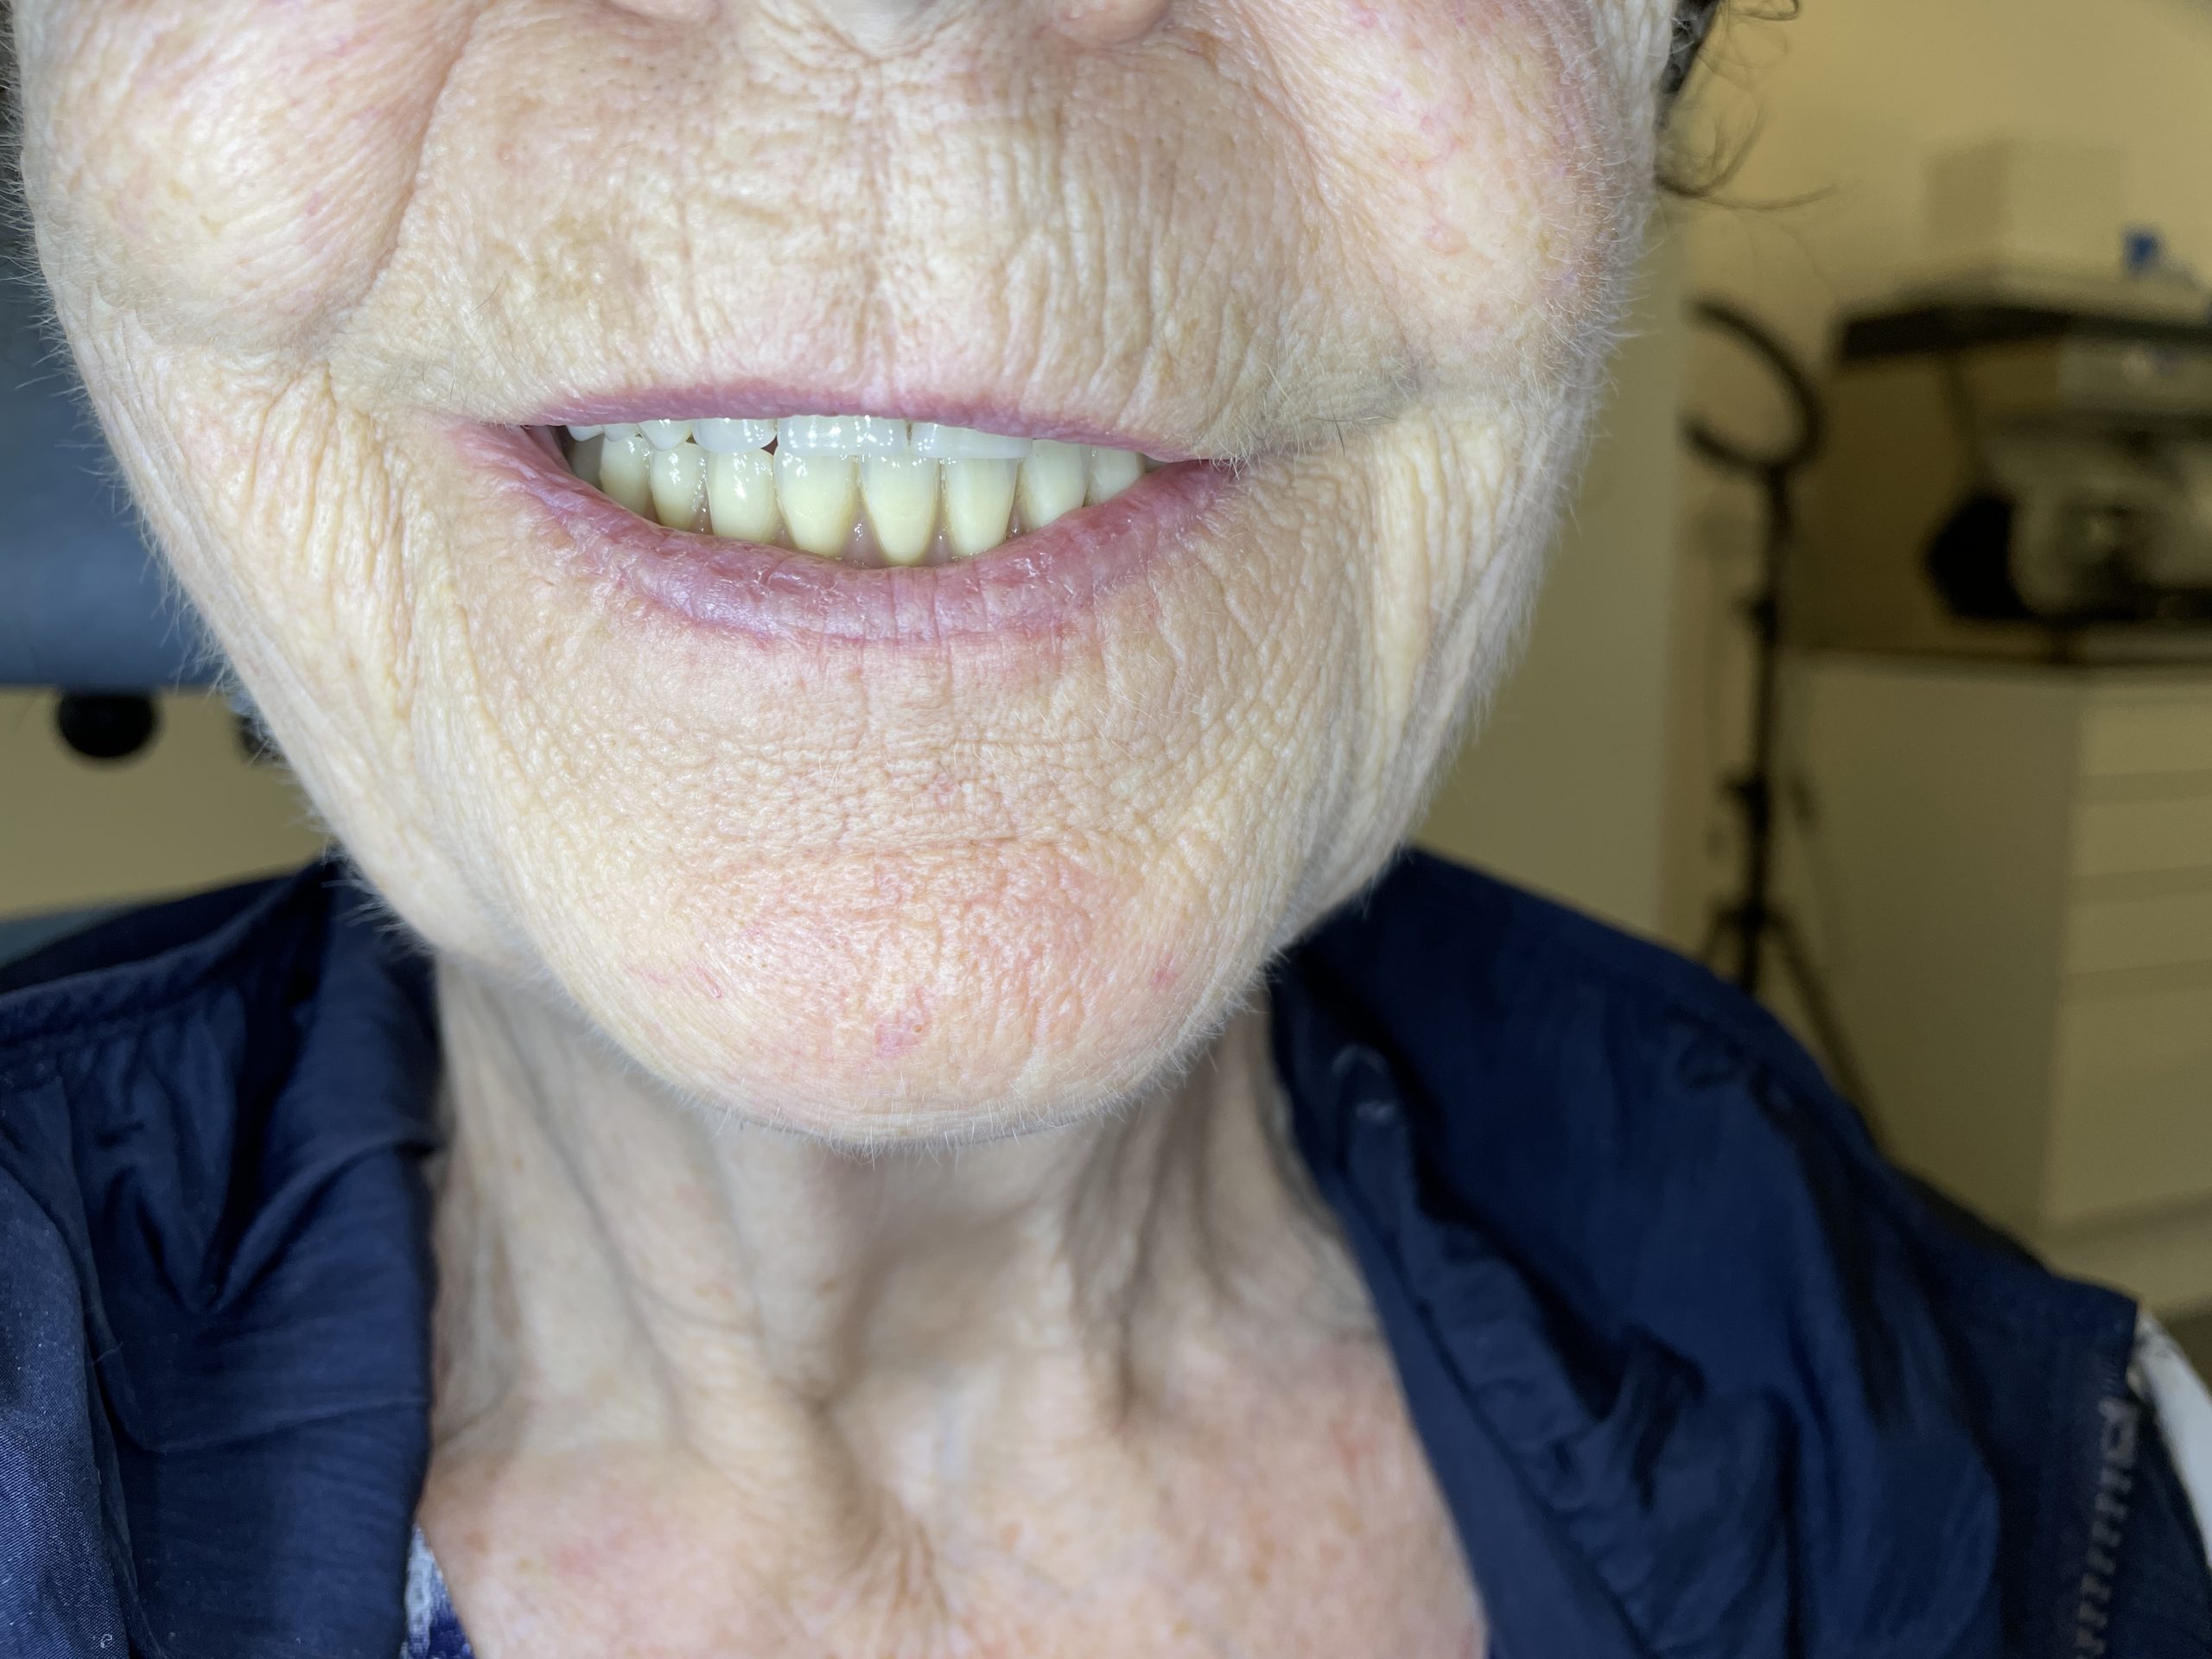 gammel tandprotese før hybrid tandprotese foran smil